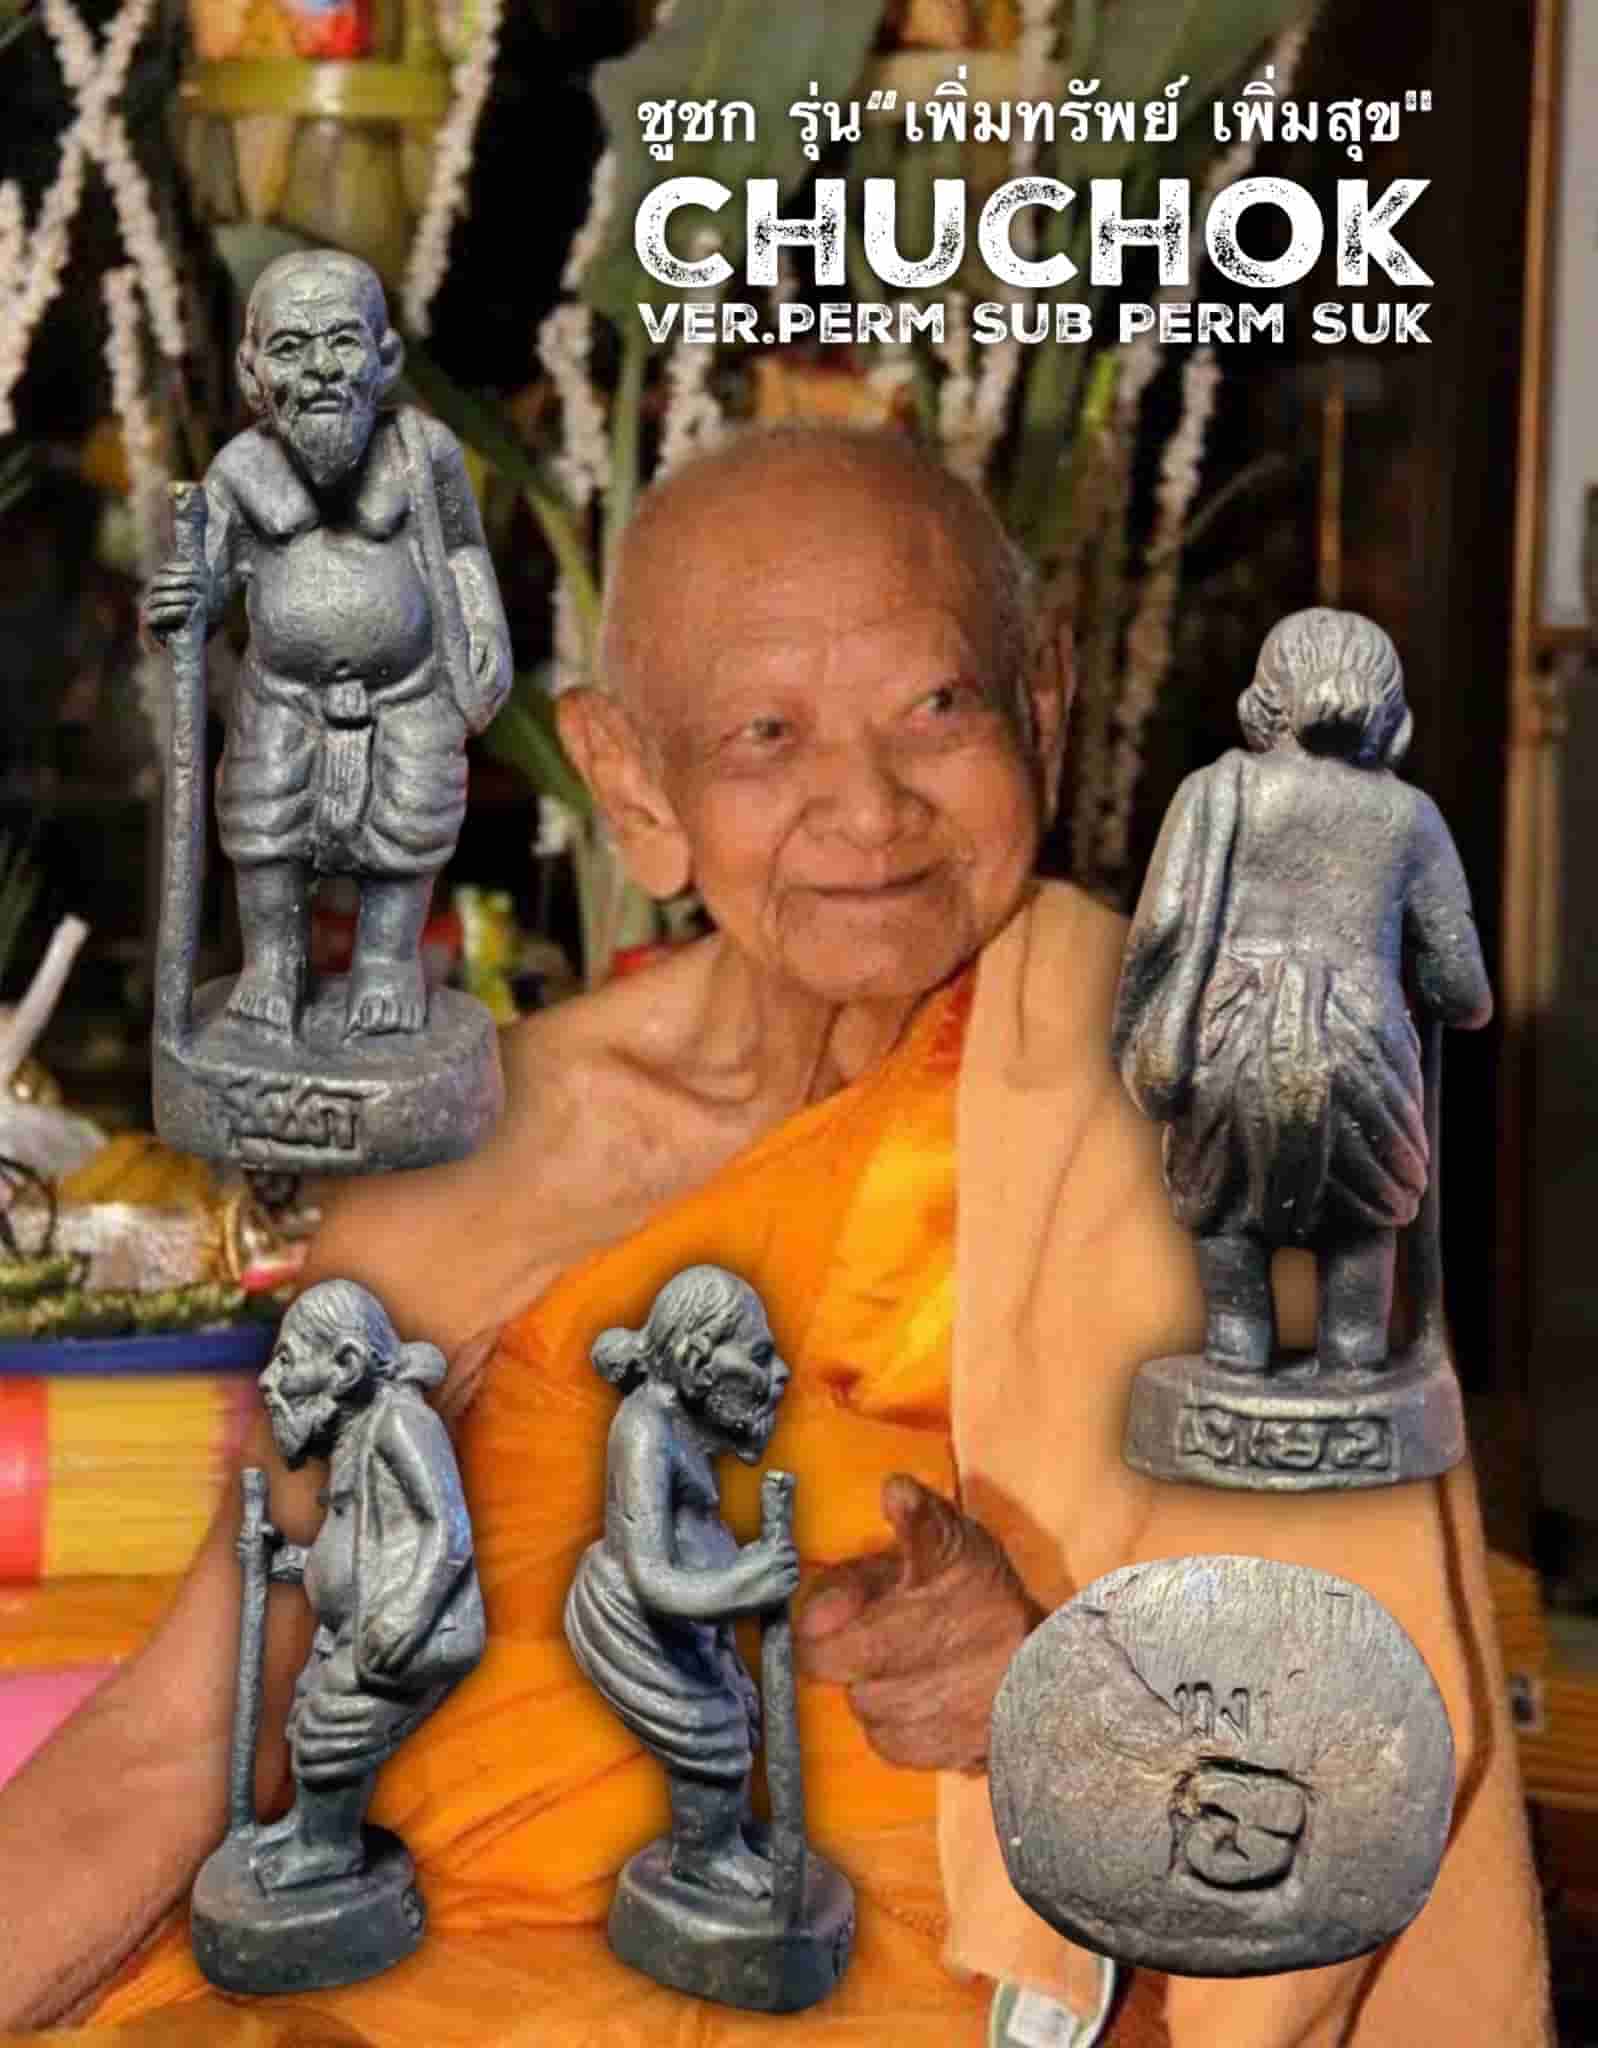 Chuchok (Version: Perm Sub Perm Suk) by LP’Hong Wat Phetburi, Surin Province. - คลิกที่นี่เพื่อดูรูปภาพใหญ่